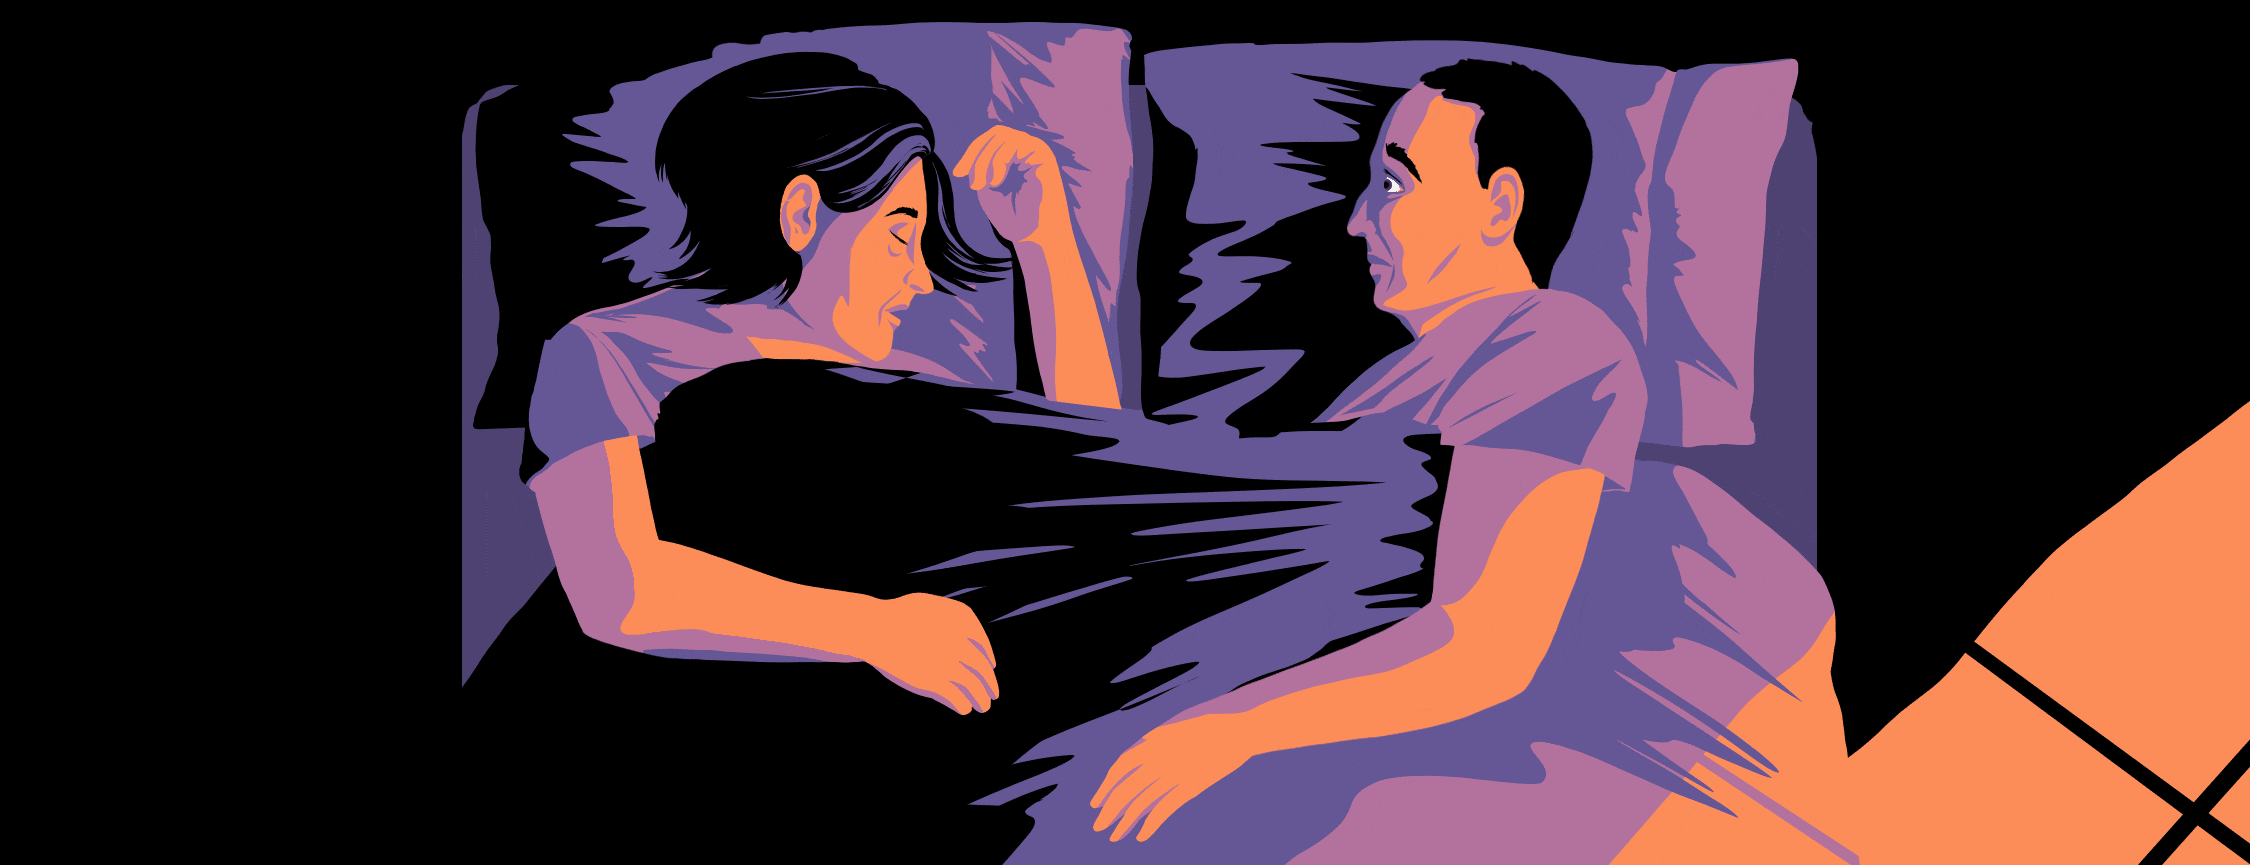 A woman sleeps next to a man who is wide awake